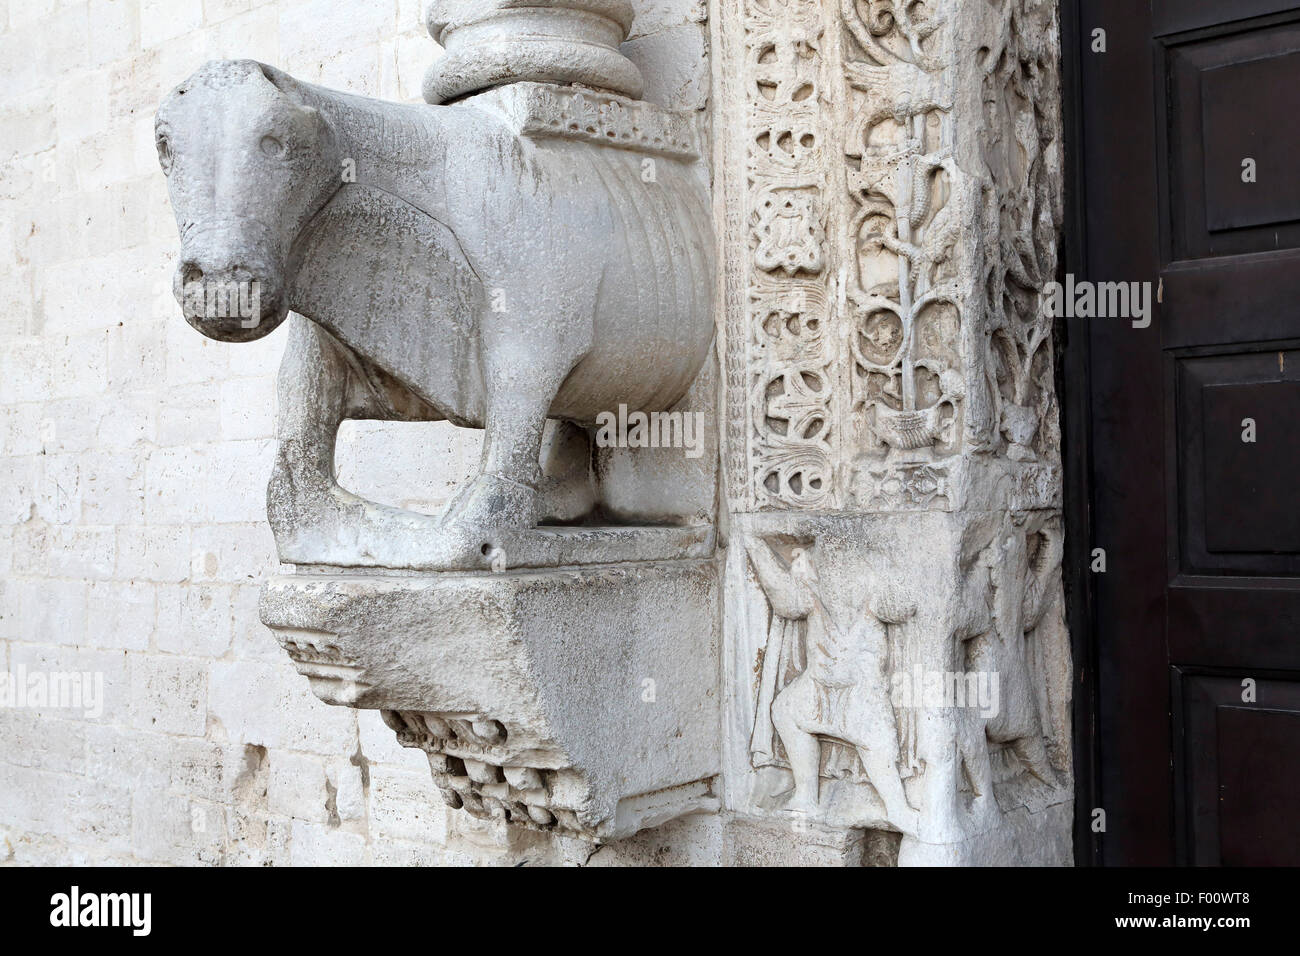 Sculpture of a bull on the main door of the St Nicholas Basilica in the Bari Vecchia quarter of Bari, Apulia, Italy. Stock Photo